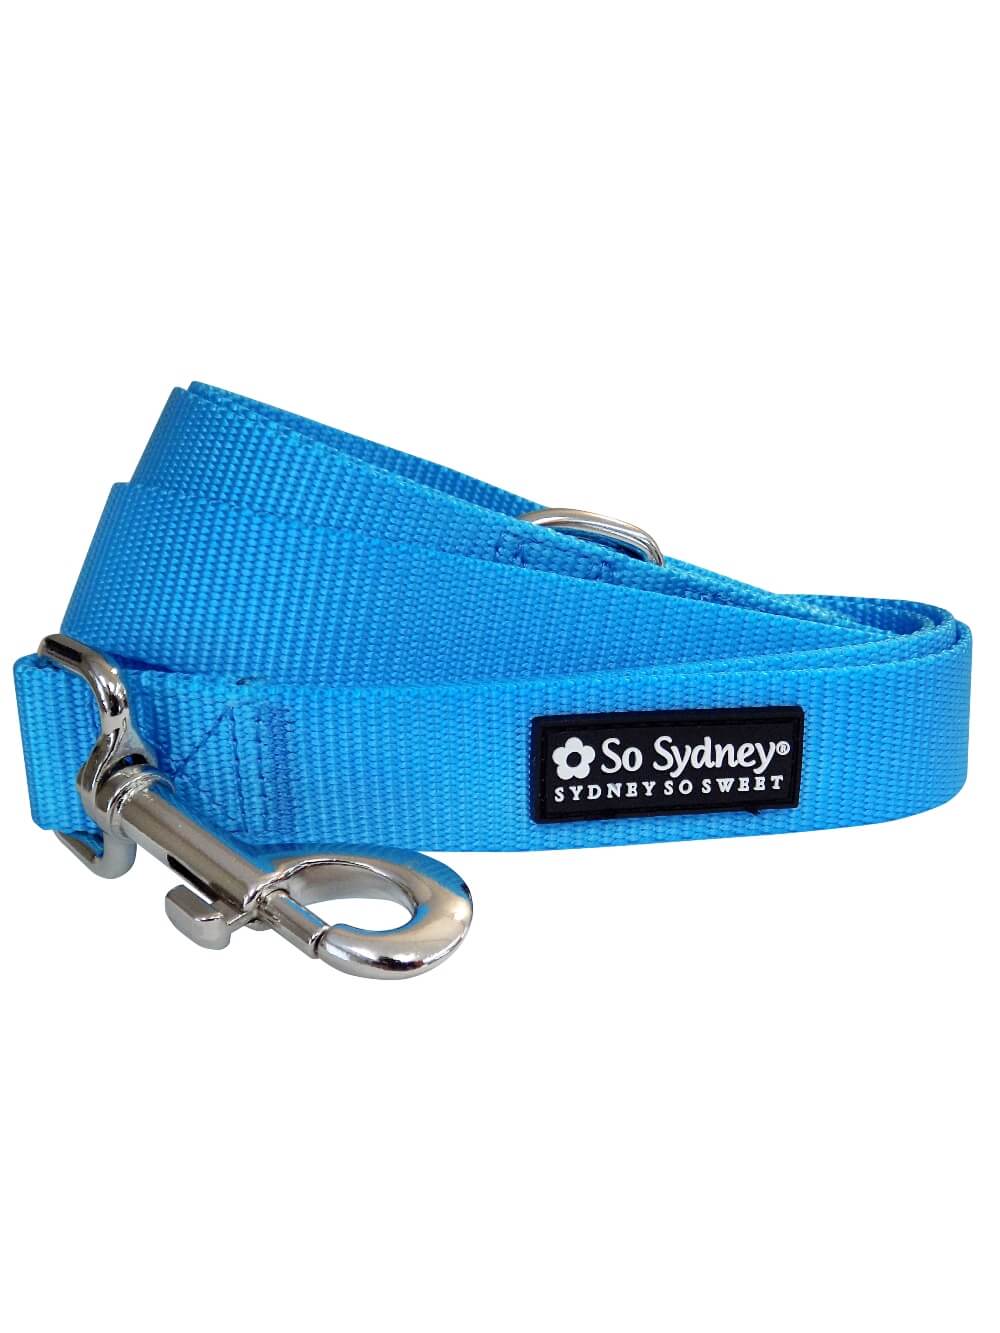 Light Blue Nylon Dog Leash for Small, Medium, or Large Dogs - Sydney So Sweet